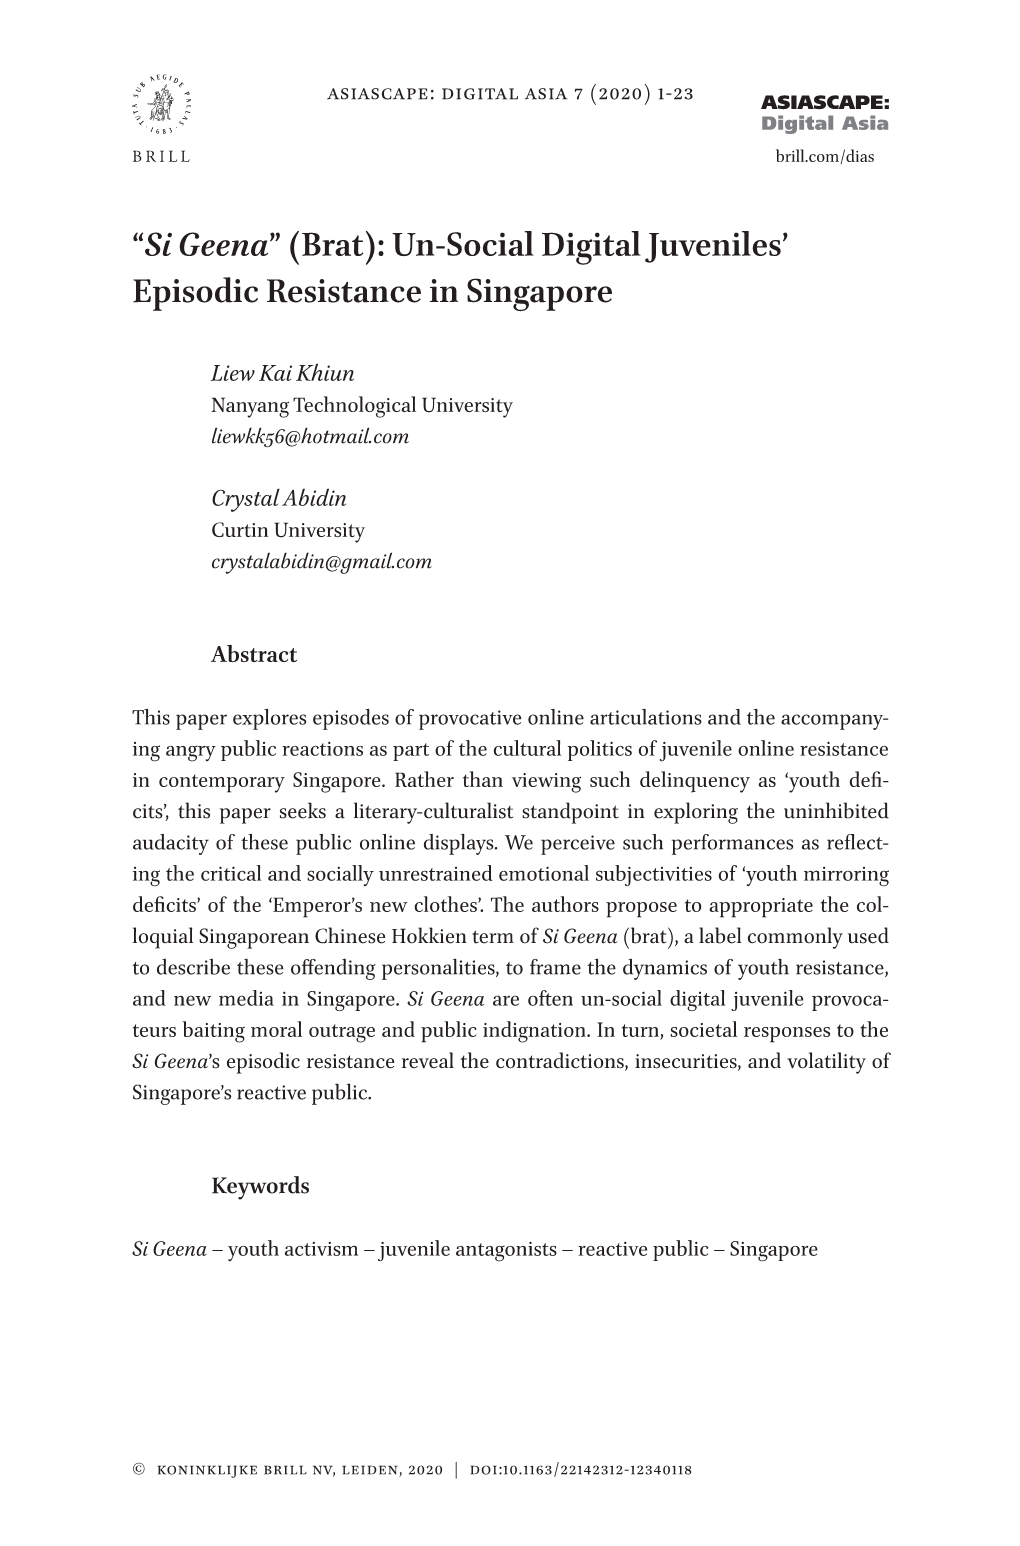 Si Geena” (Brat): Un-Social Digital Juveniles’ Episodic Resistance in Singapore